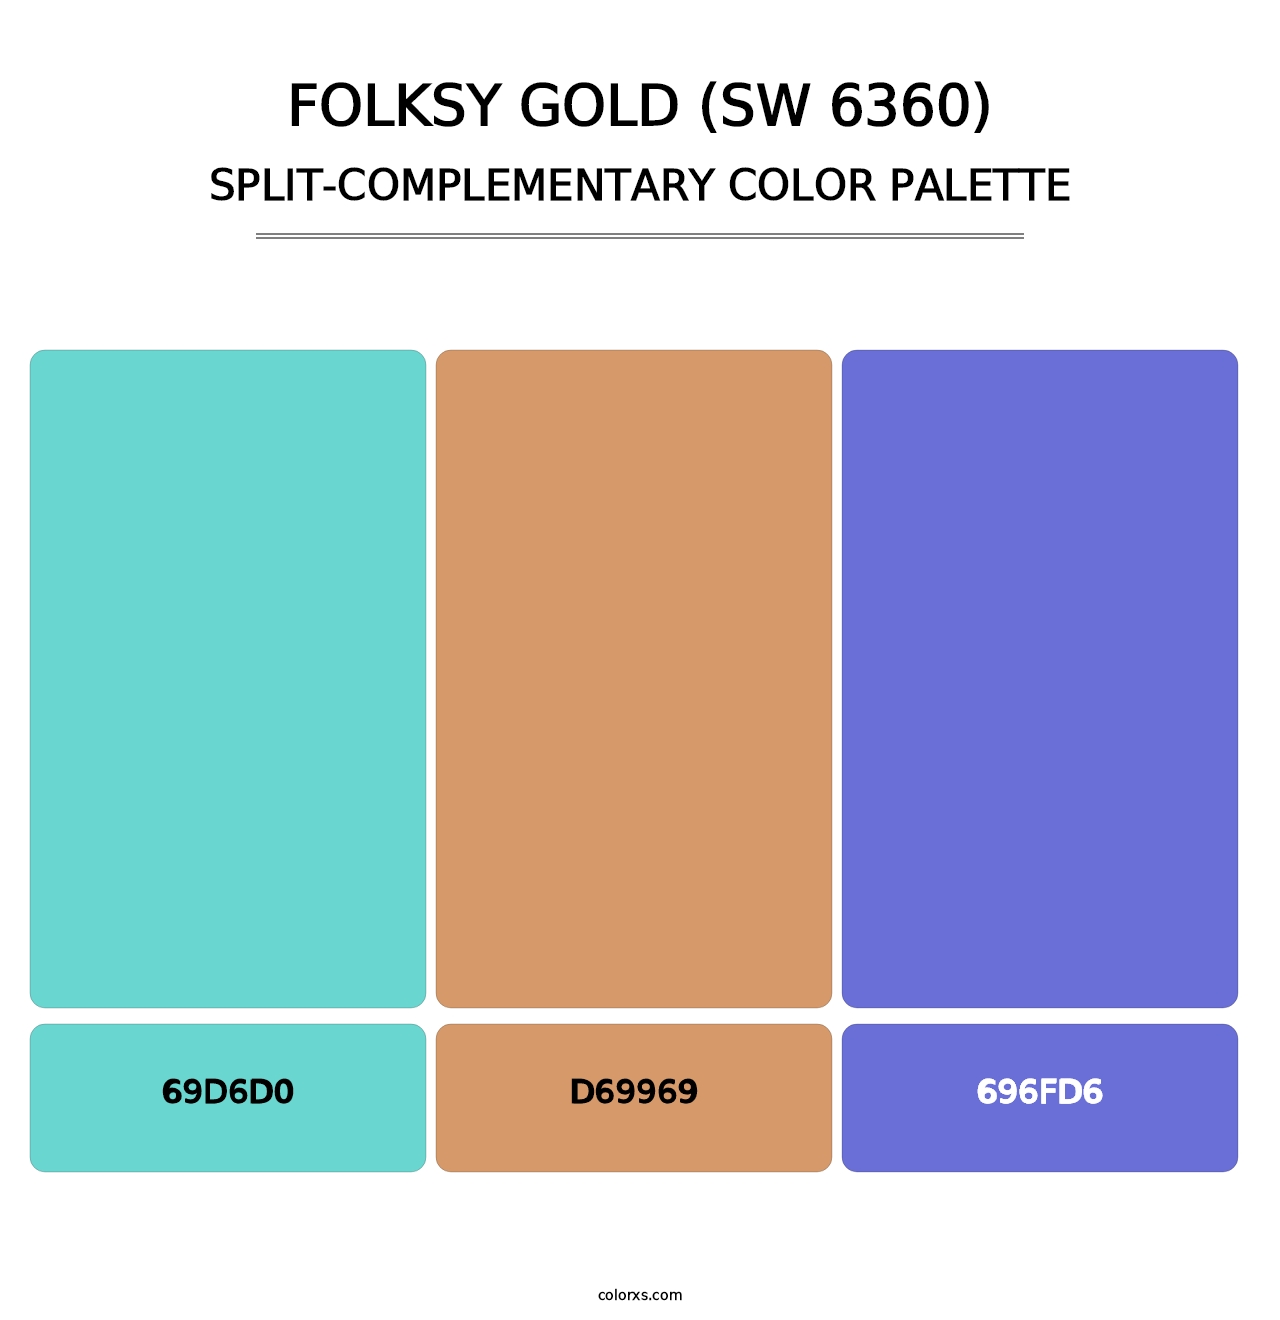 Folksy Gold (SW 6360) - Split-Complementary Color Palette